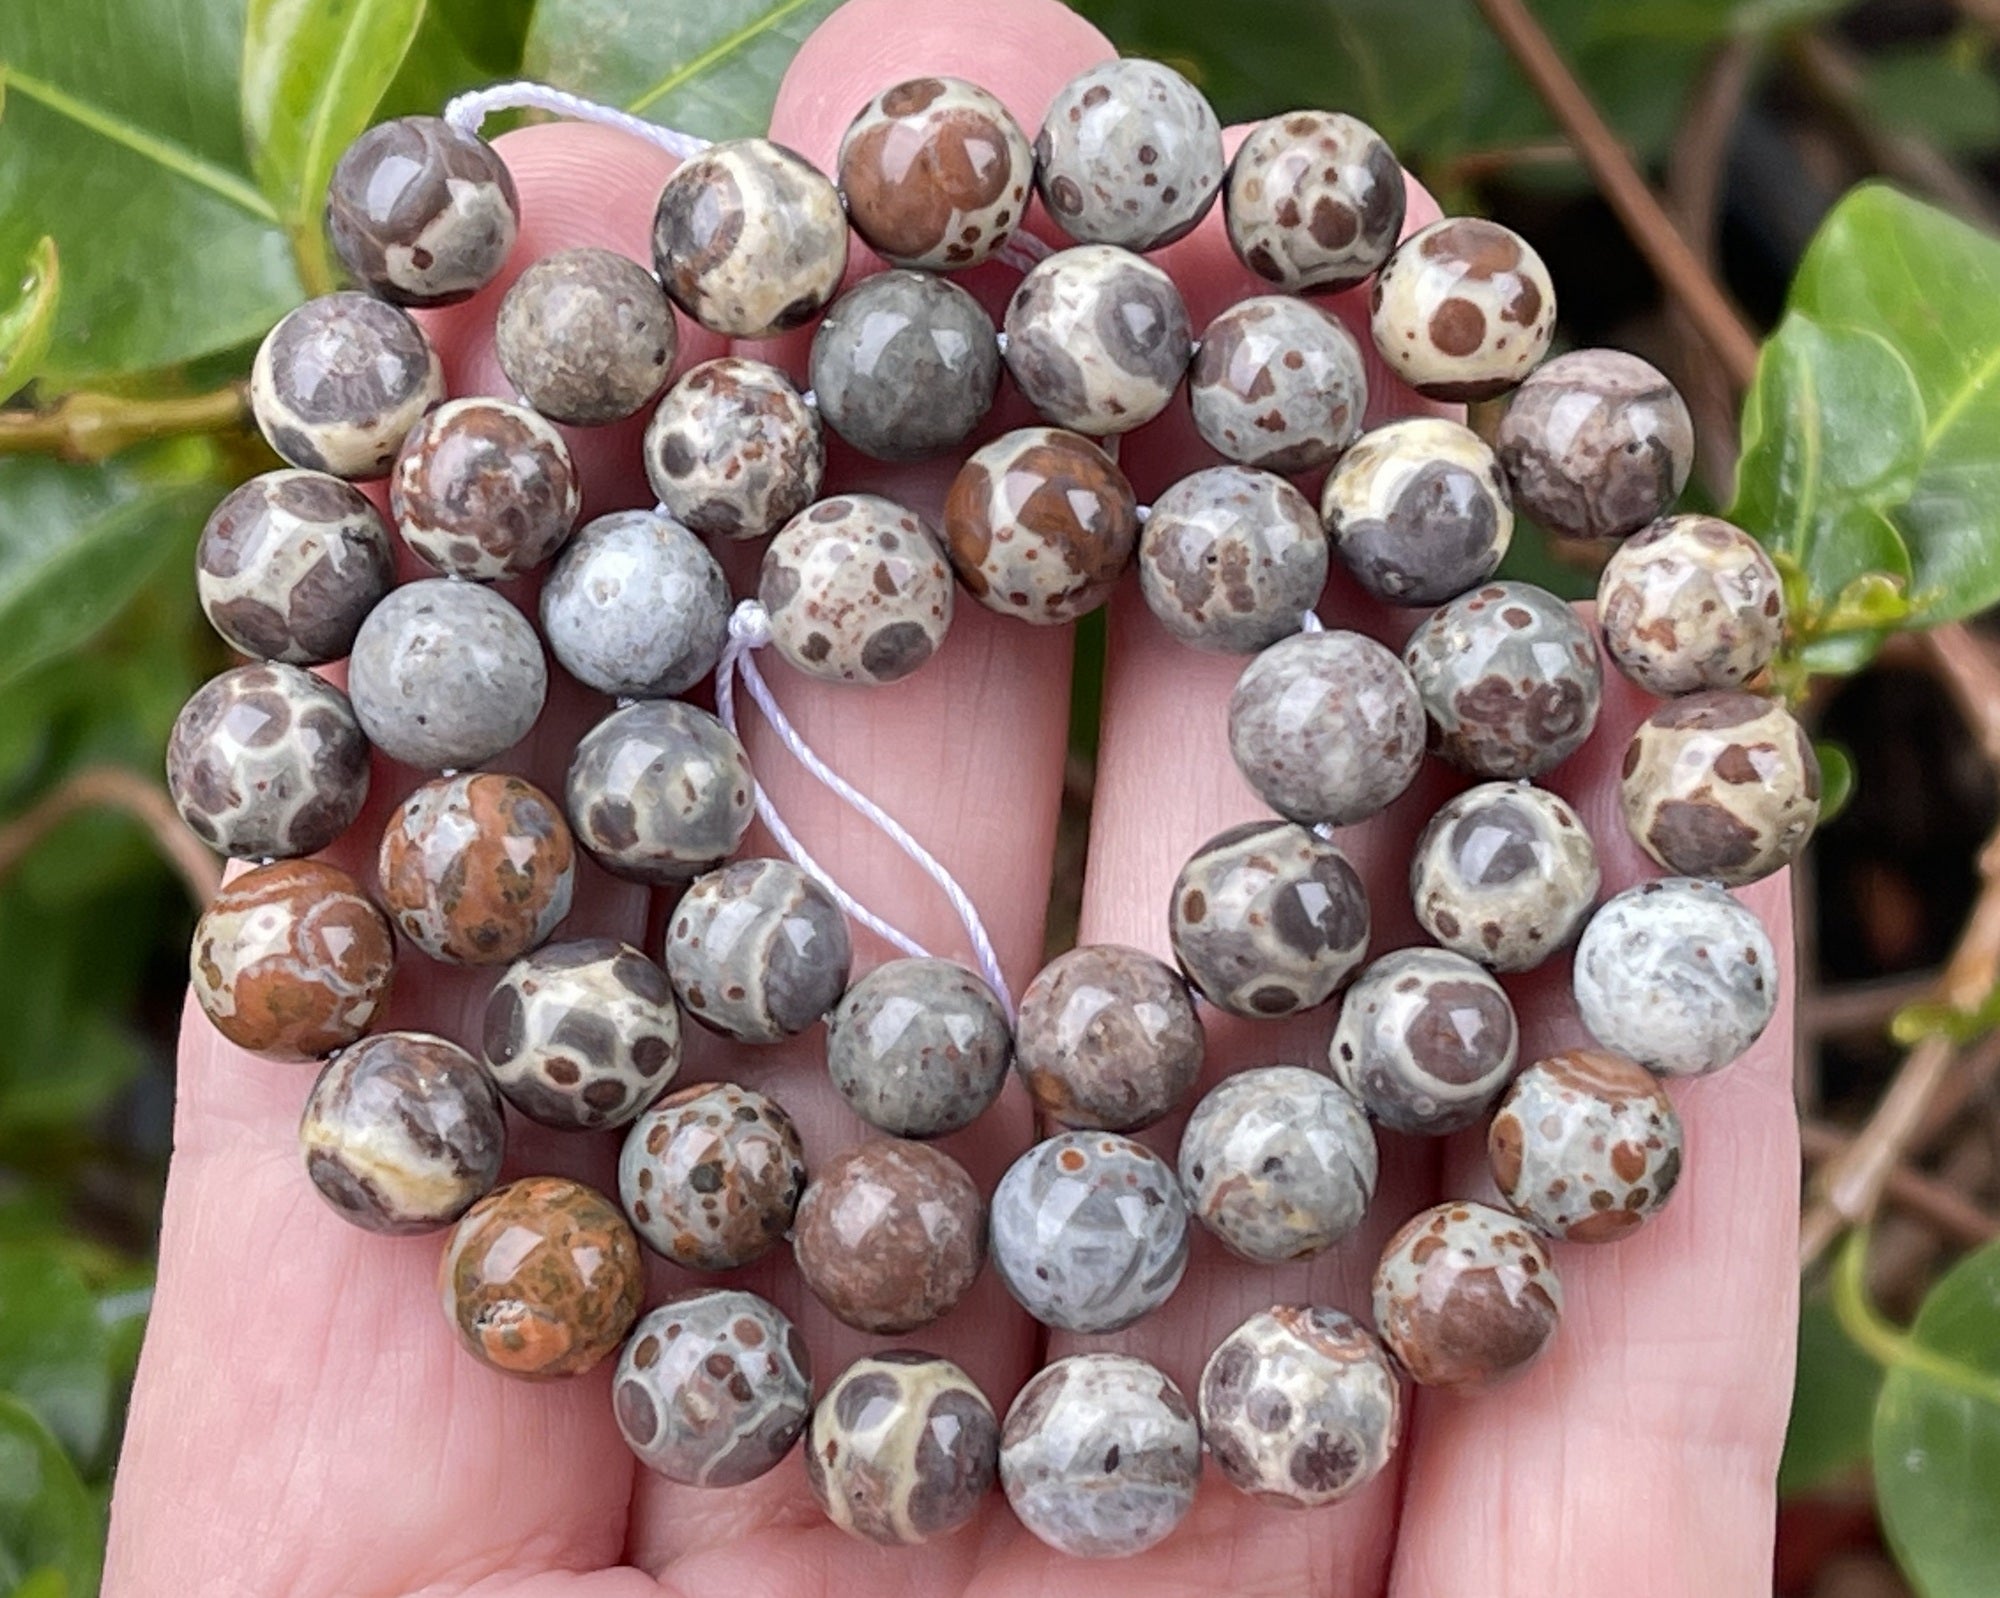 Astroite Jasper 8mm round natural gemstone beads 15.5" strand